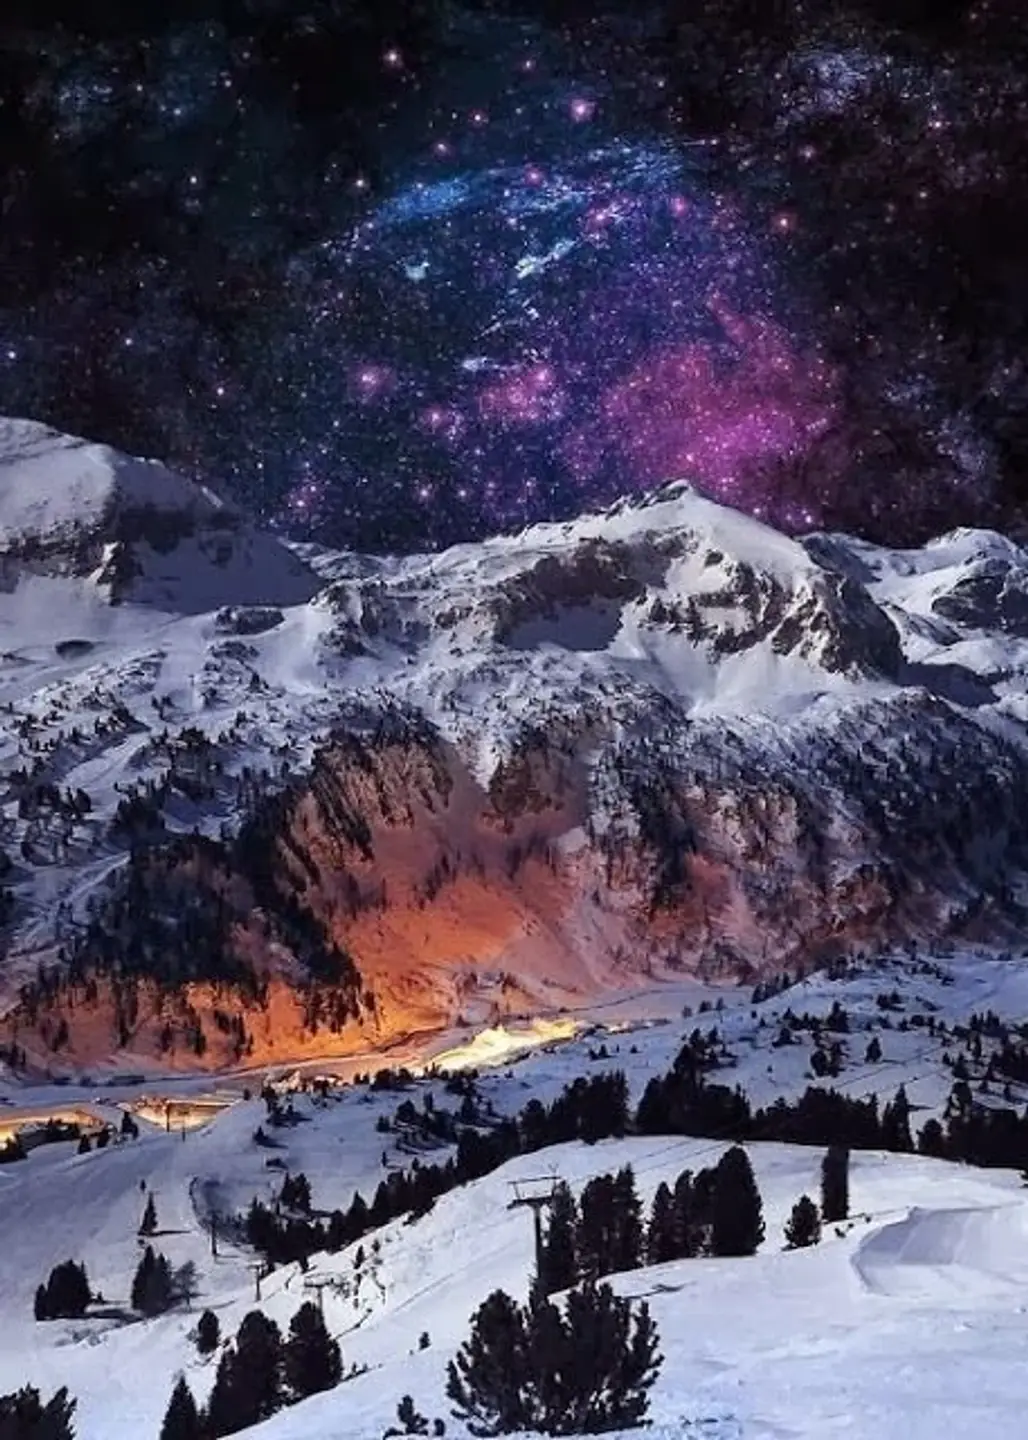 Starry Snowy Night